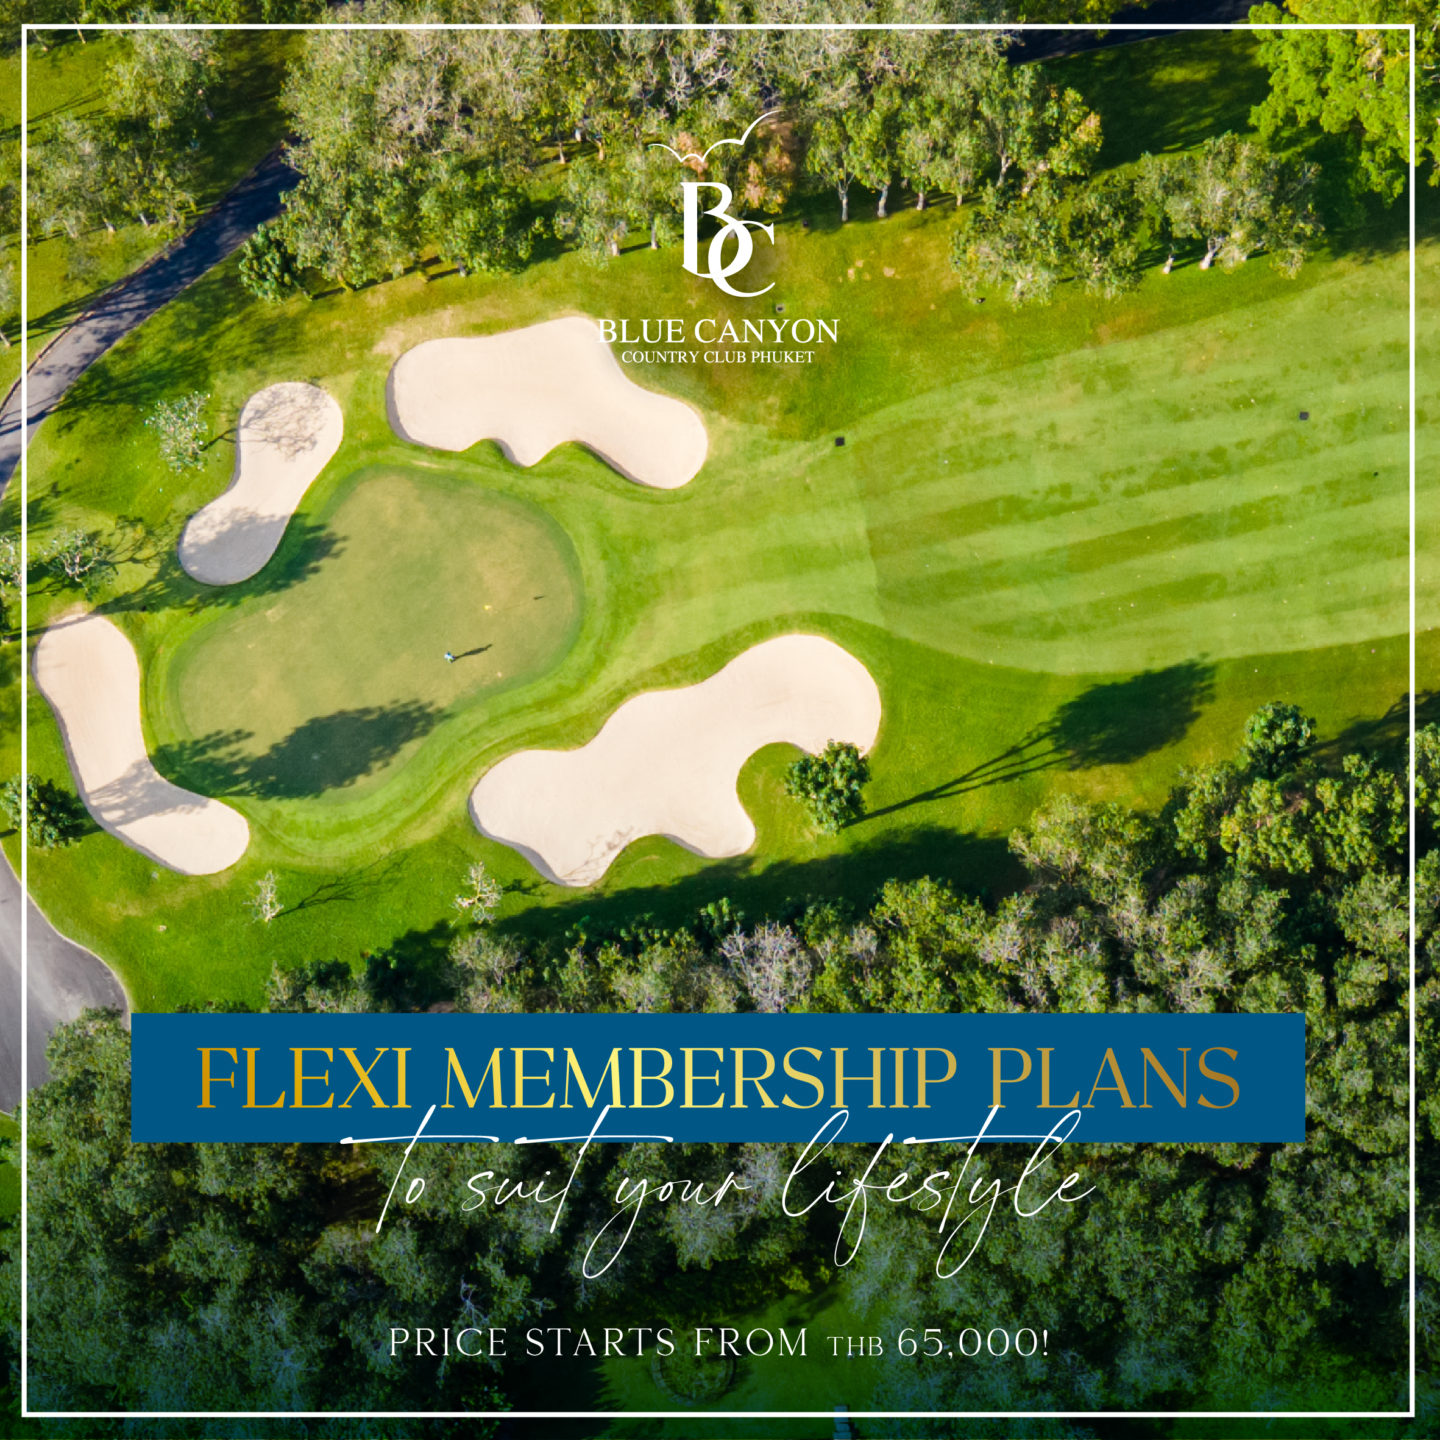 Flexi Membership Plans